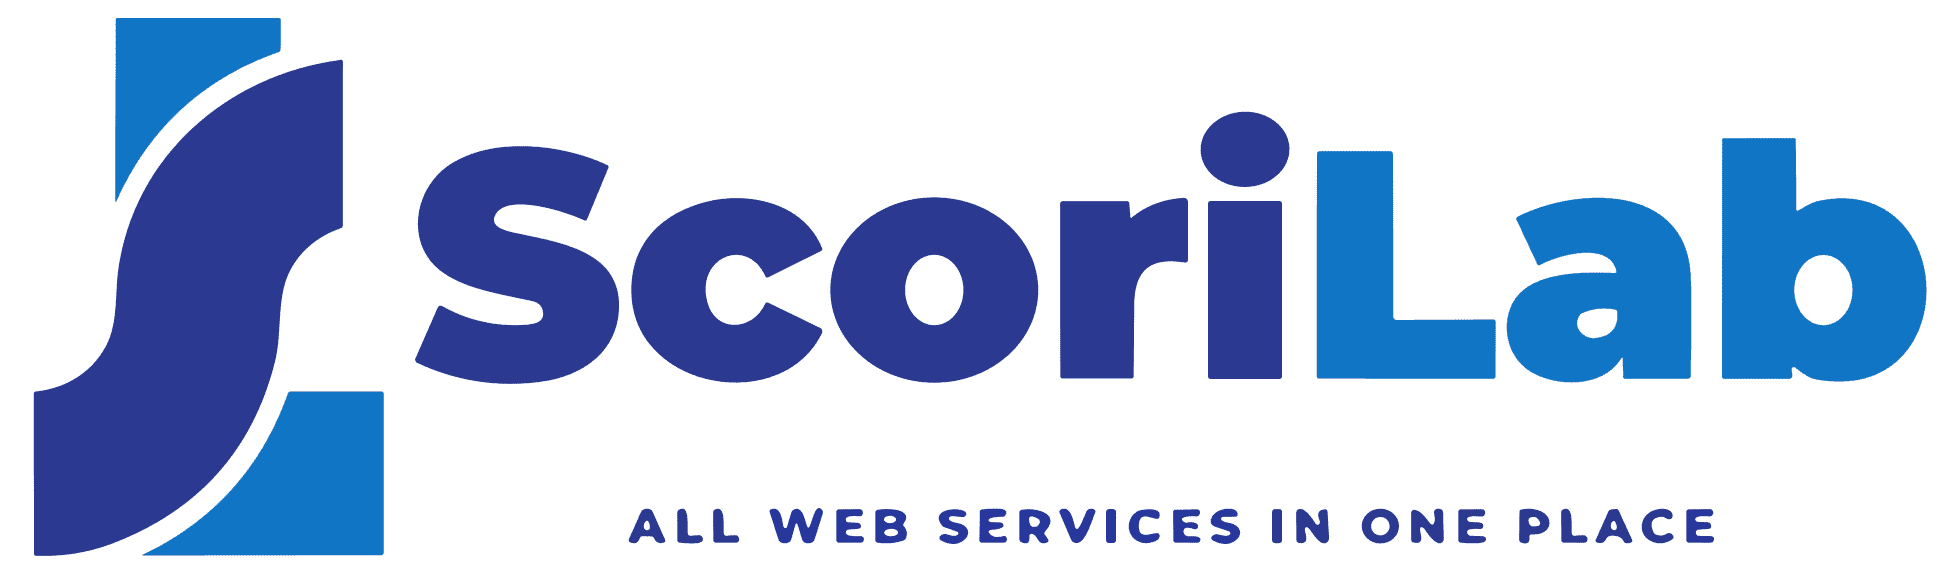 Scorilab Logo